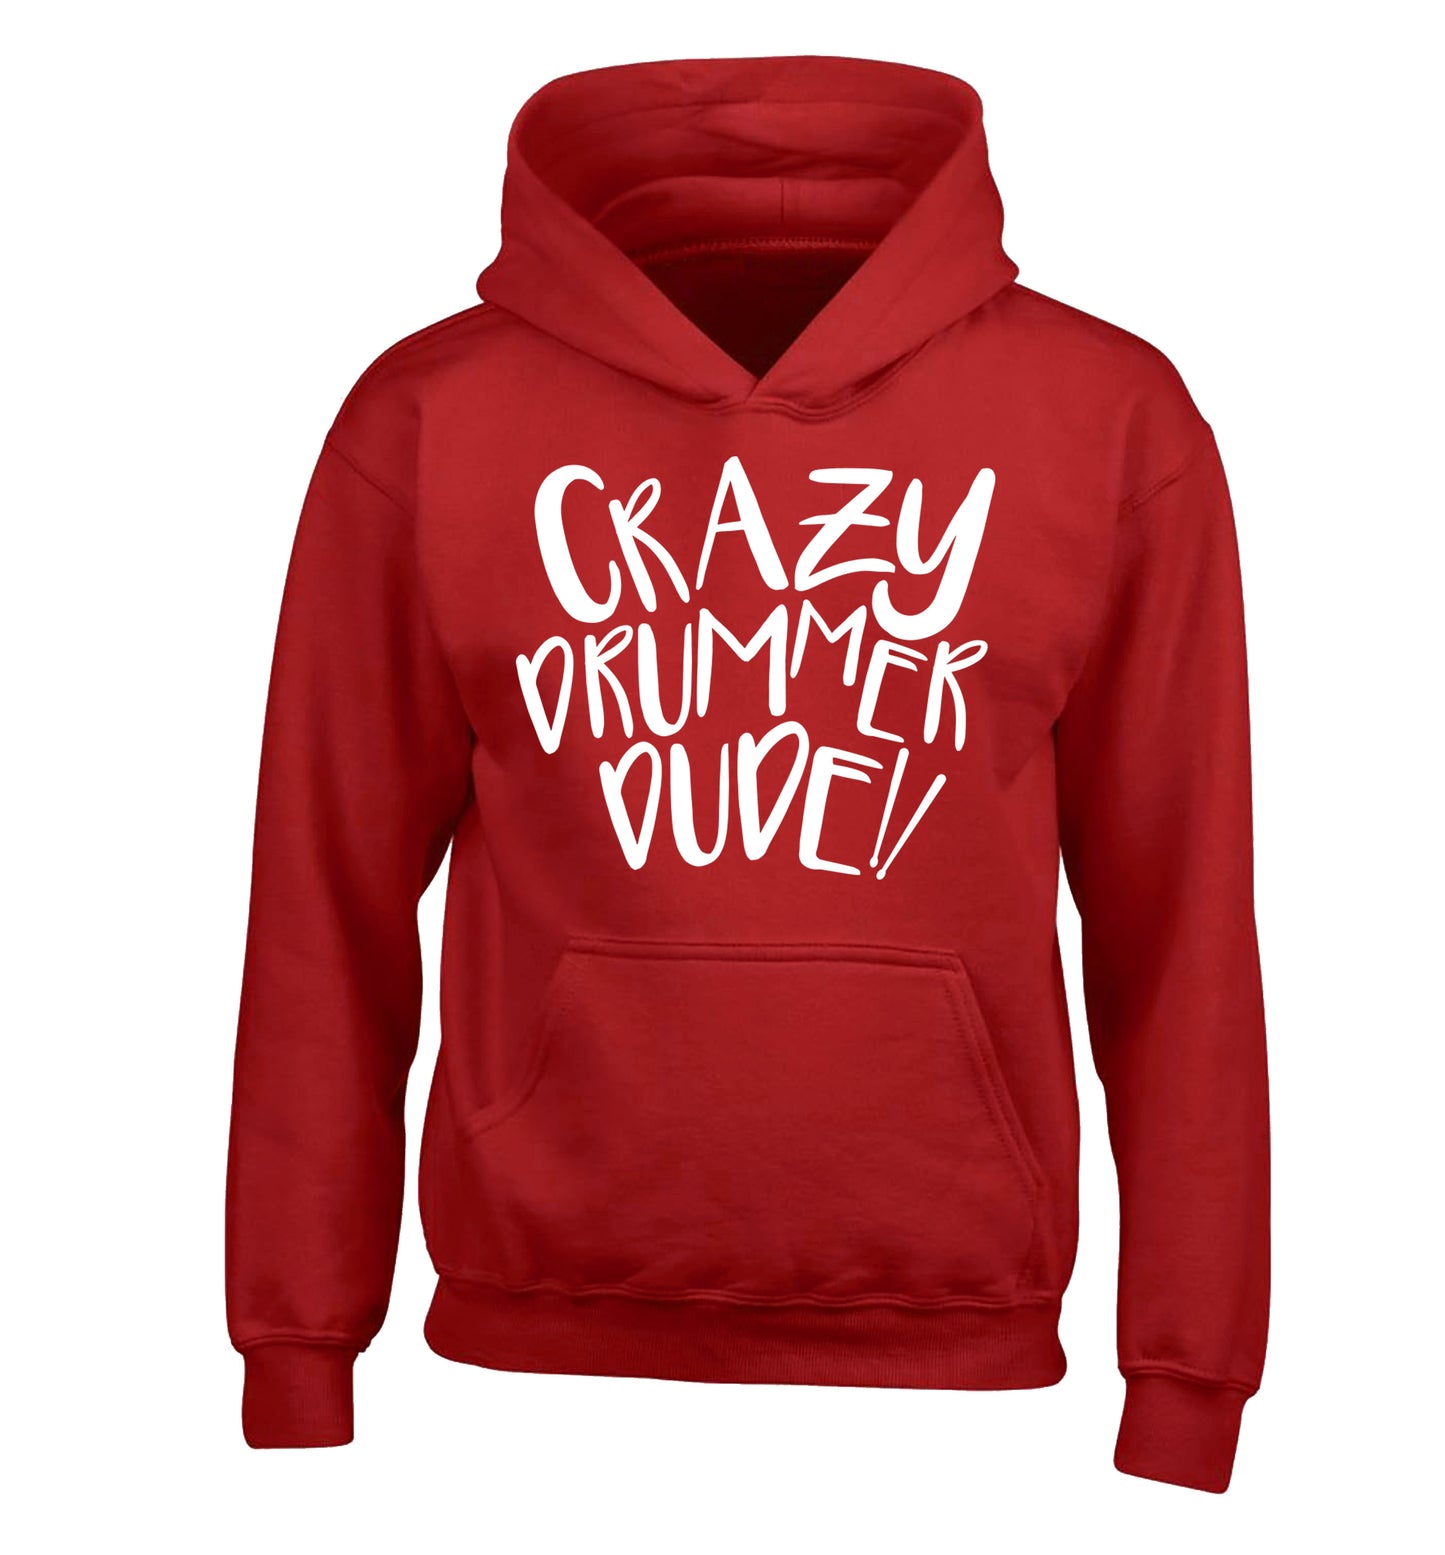 Crazy drummer dude children's red hoodie 12-14 Years